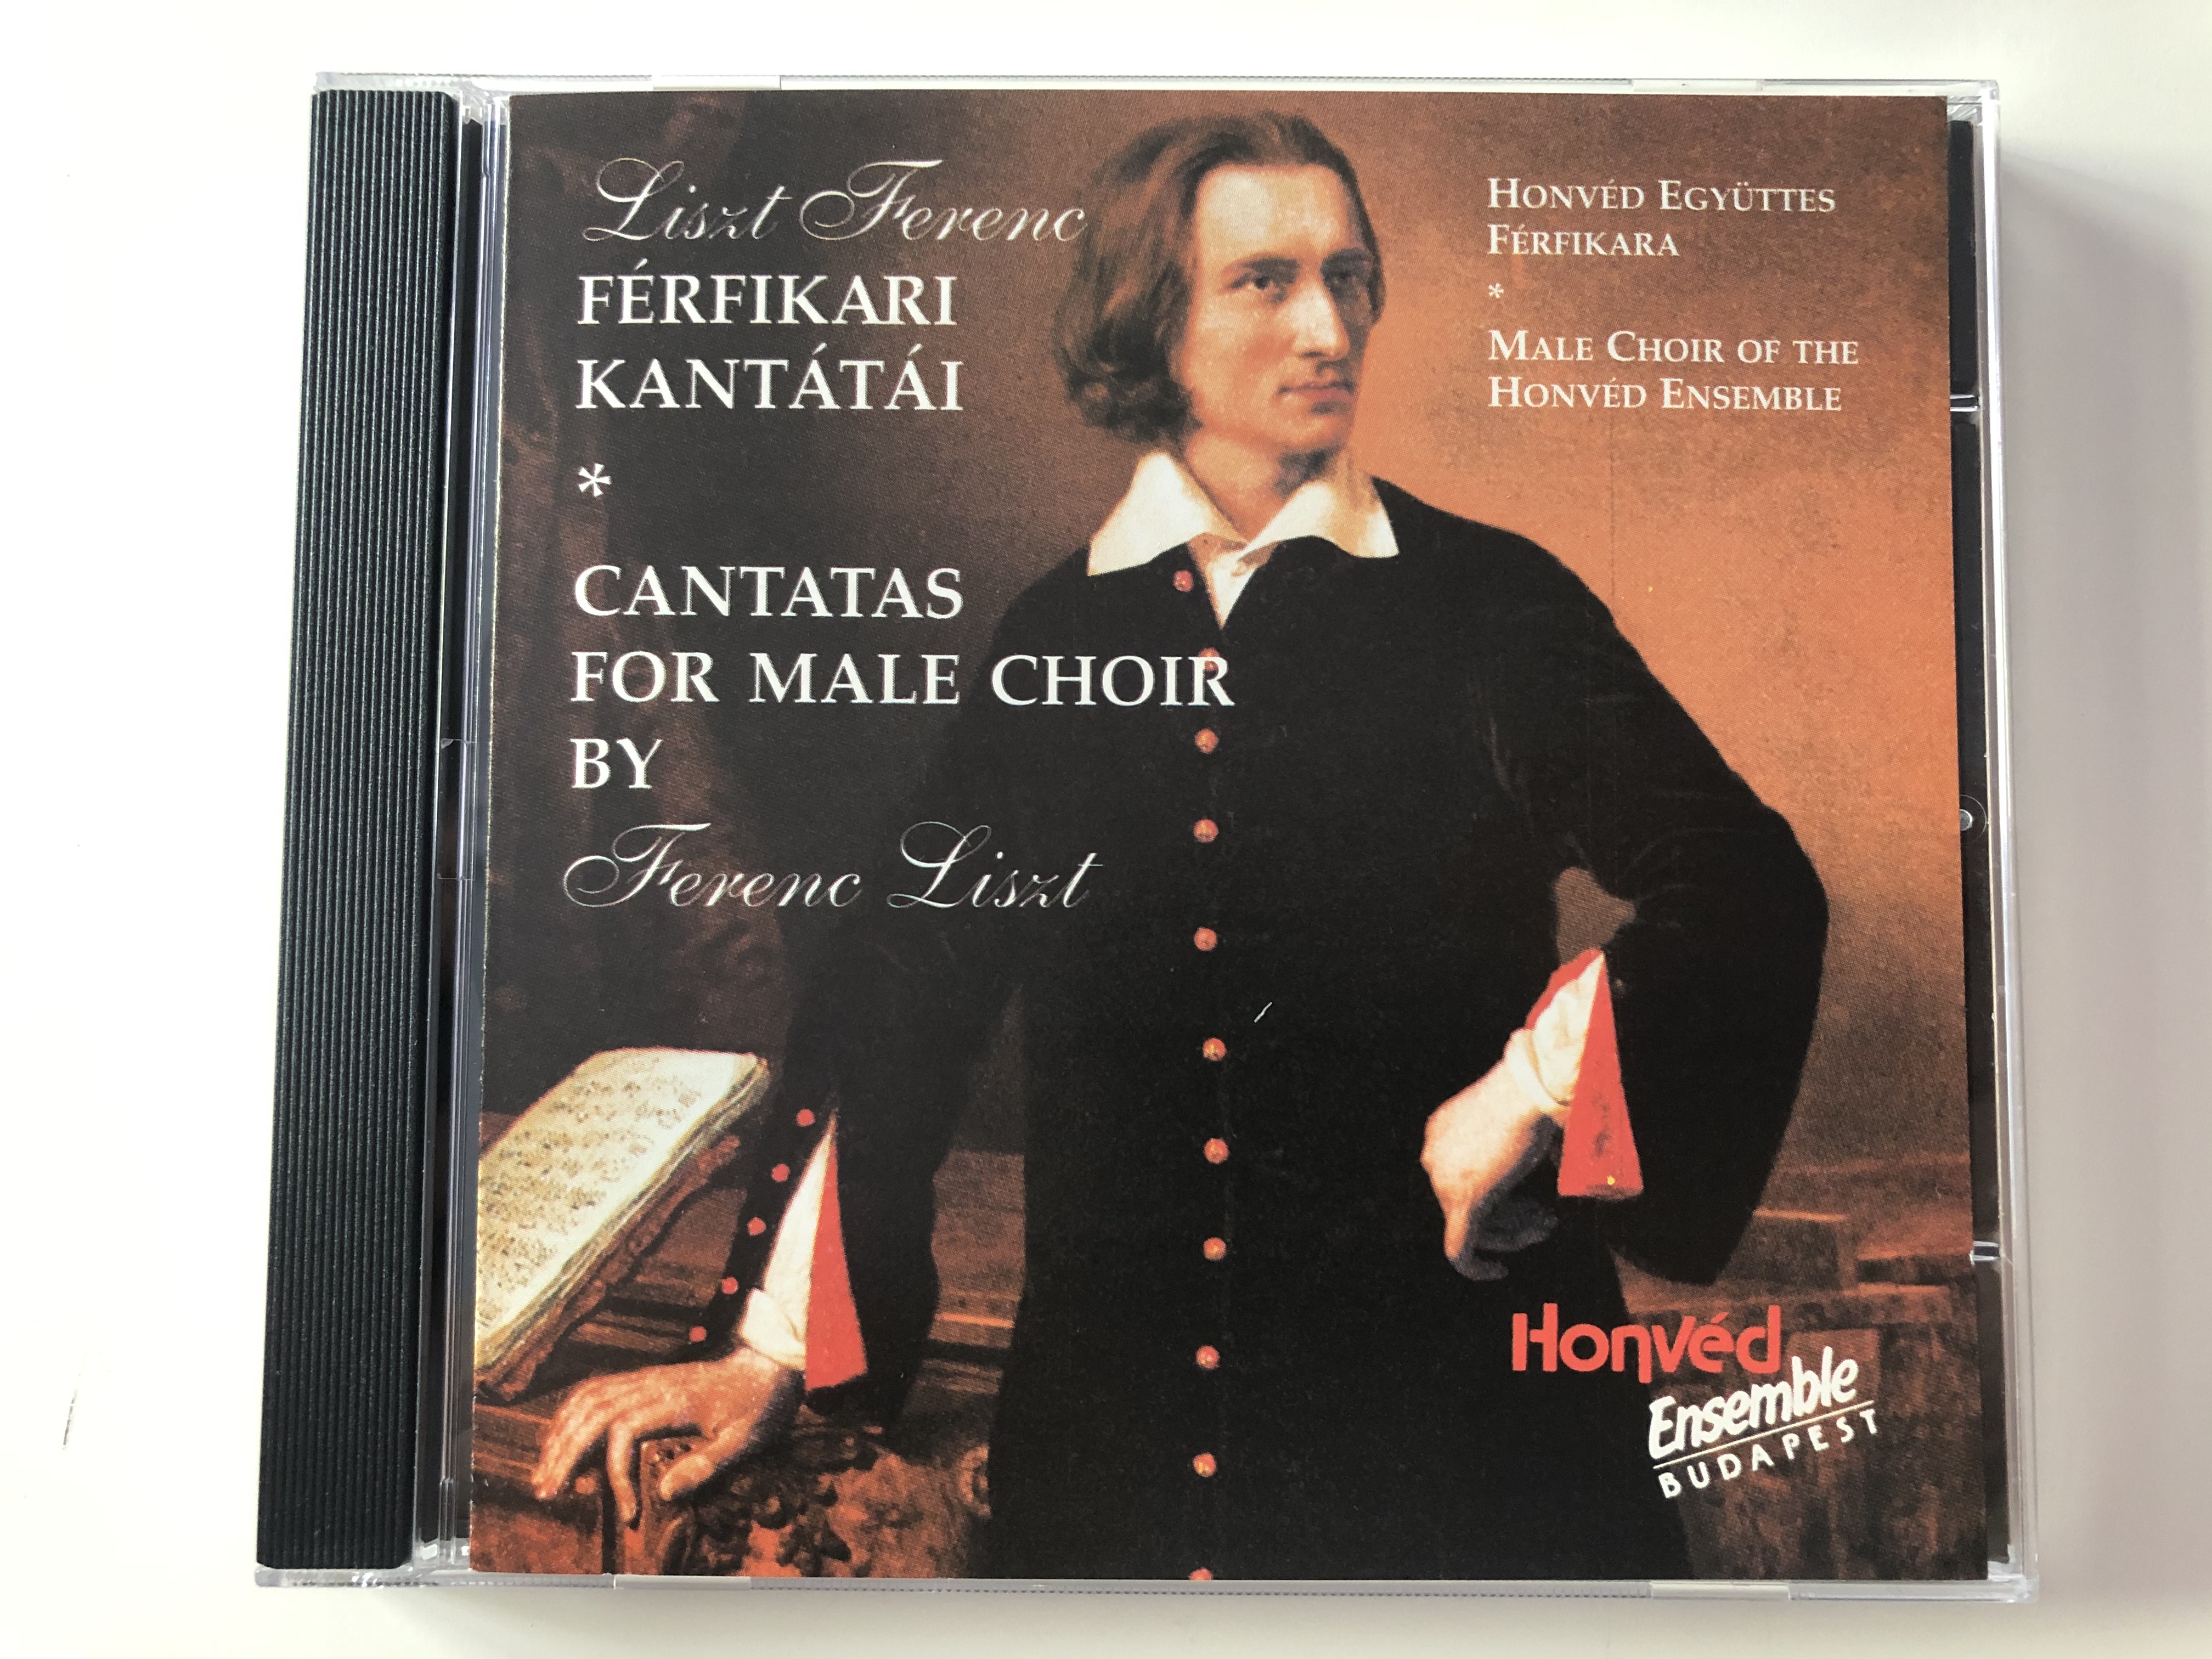 liszt-ferenc-ferfikari-kantatai-cantatas-for-male-choir-by-ferenc-liszt-honved-egyuttes-ferfikara-male-choir-of-the-honved-ensemble-yellow-records-audio-cd-1996-stereo-yrcd-27595-1-.jpg